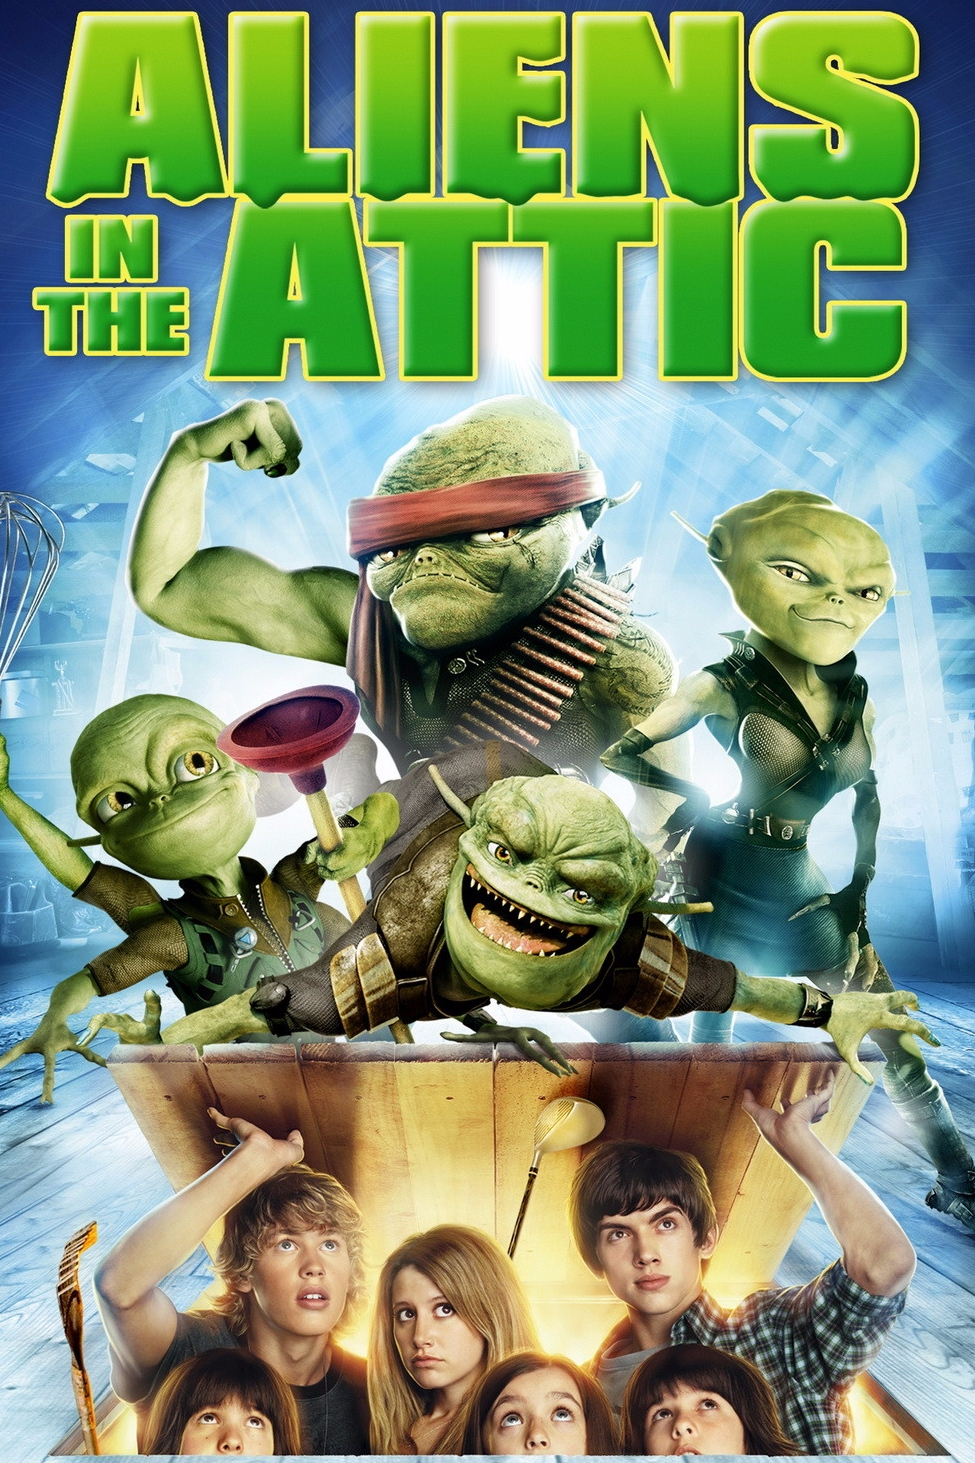 Aliens in the Attic (Aliens in the Attic), Adventure, Comedy, Family, Fantasy, Sci-Fi, USA, Canada, 2009